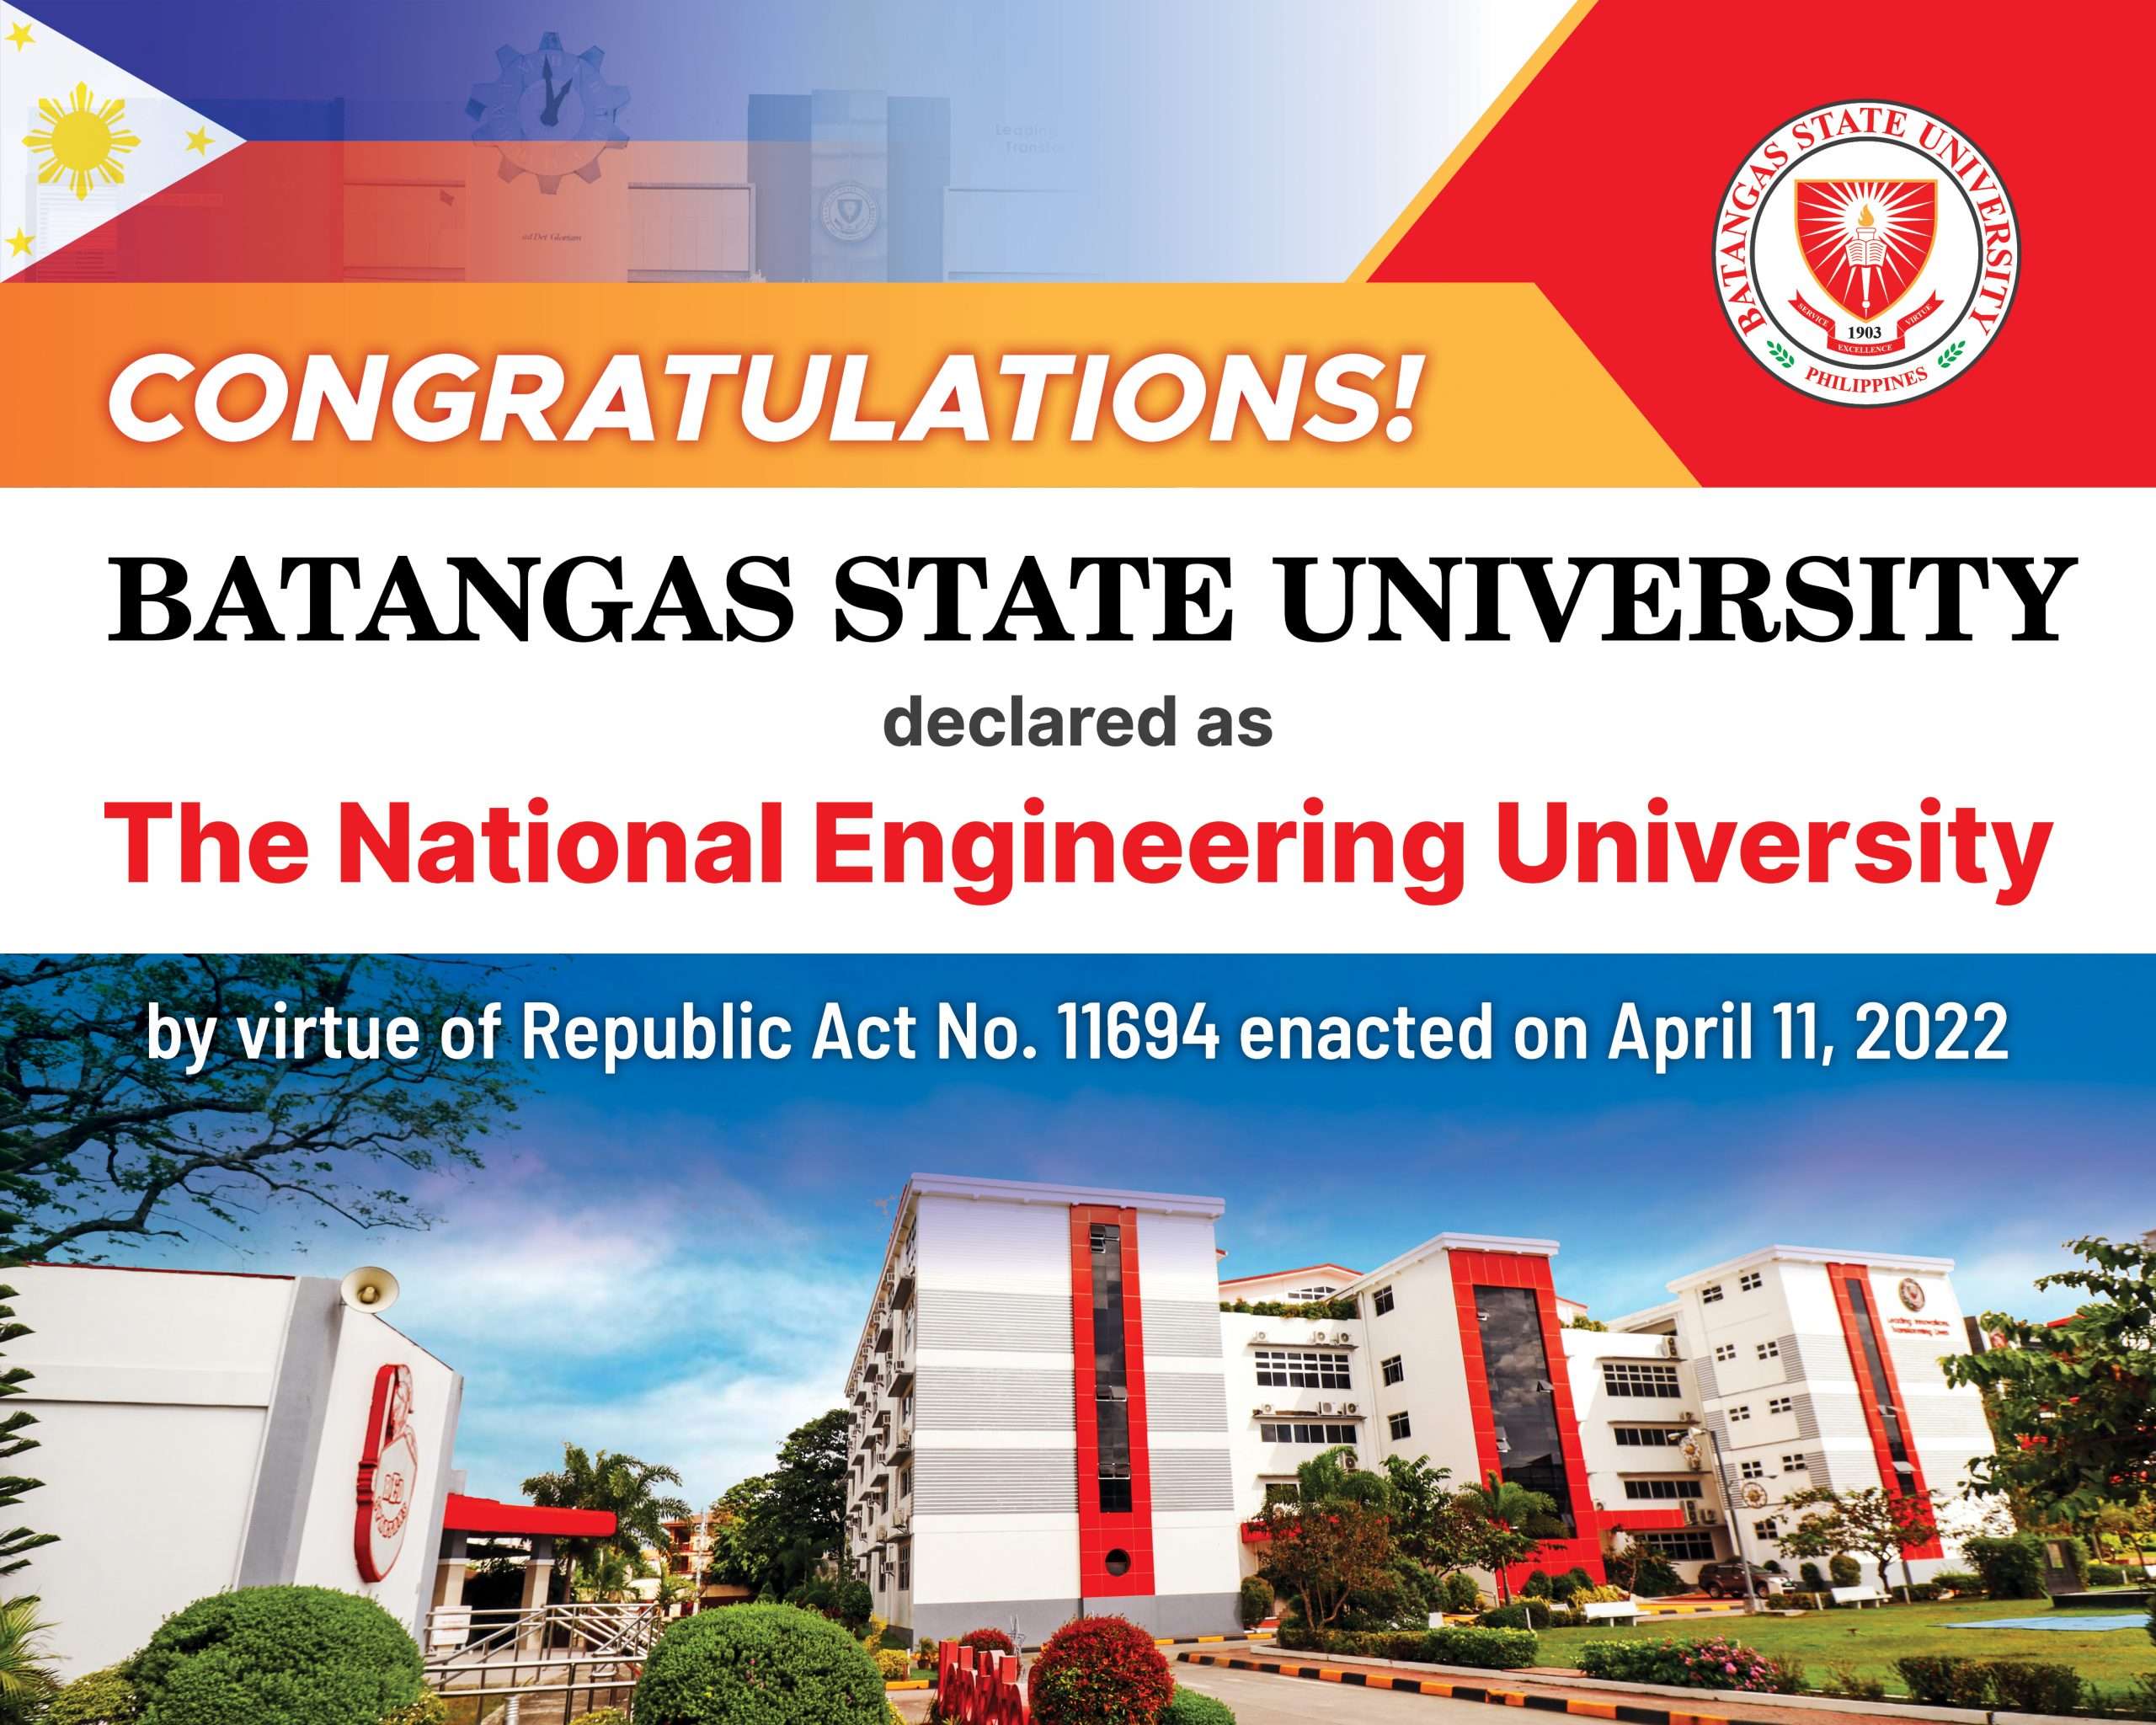 batangas-state-university-declared-as-the-philippines-national-engineering-university